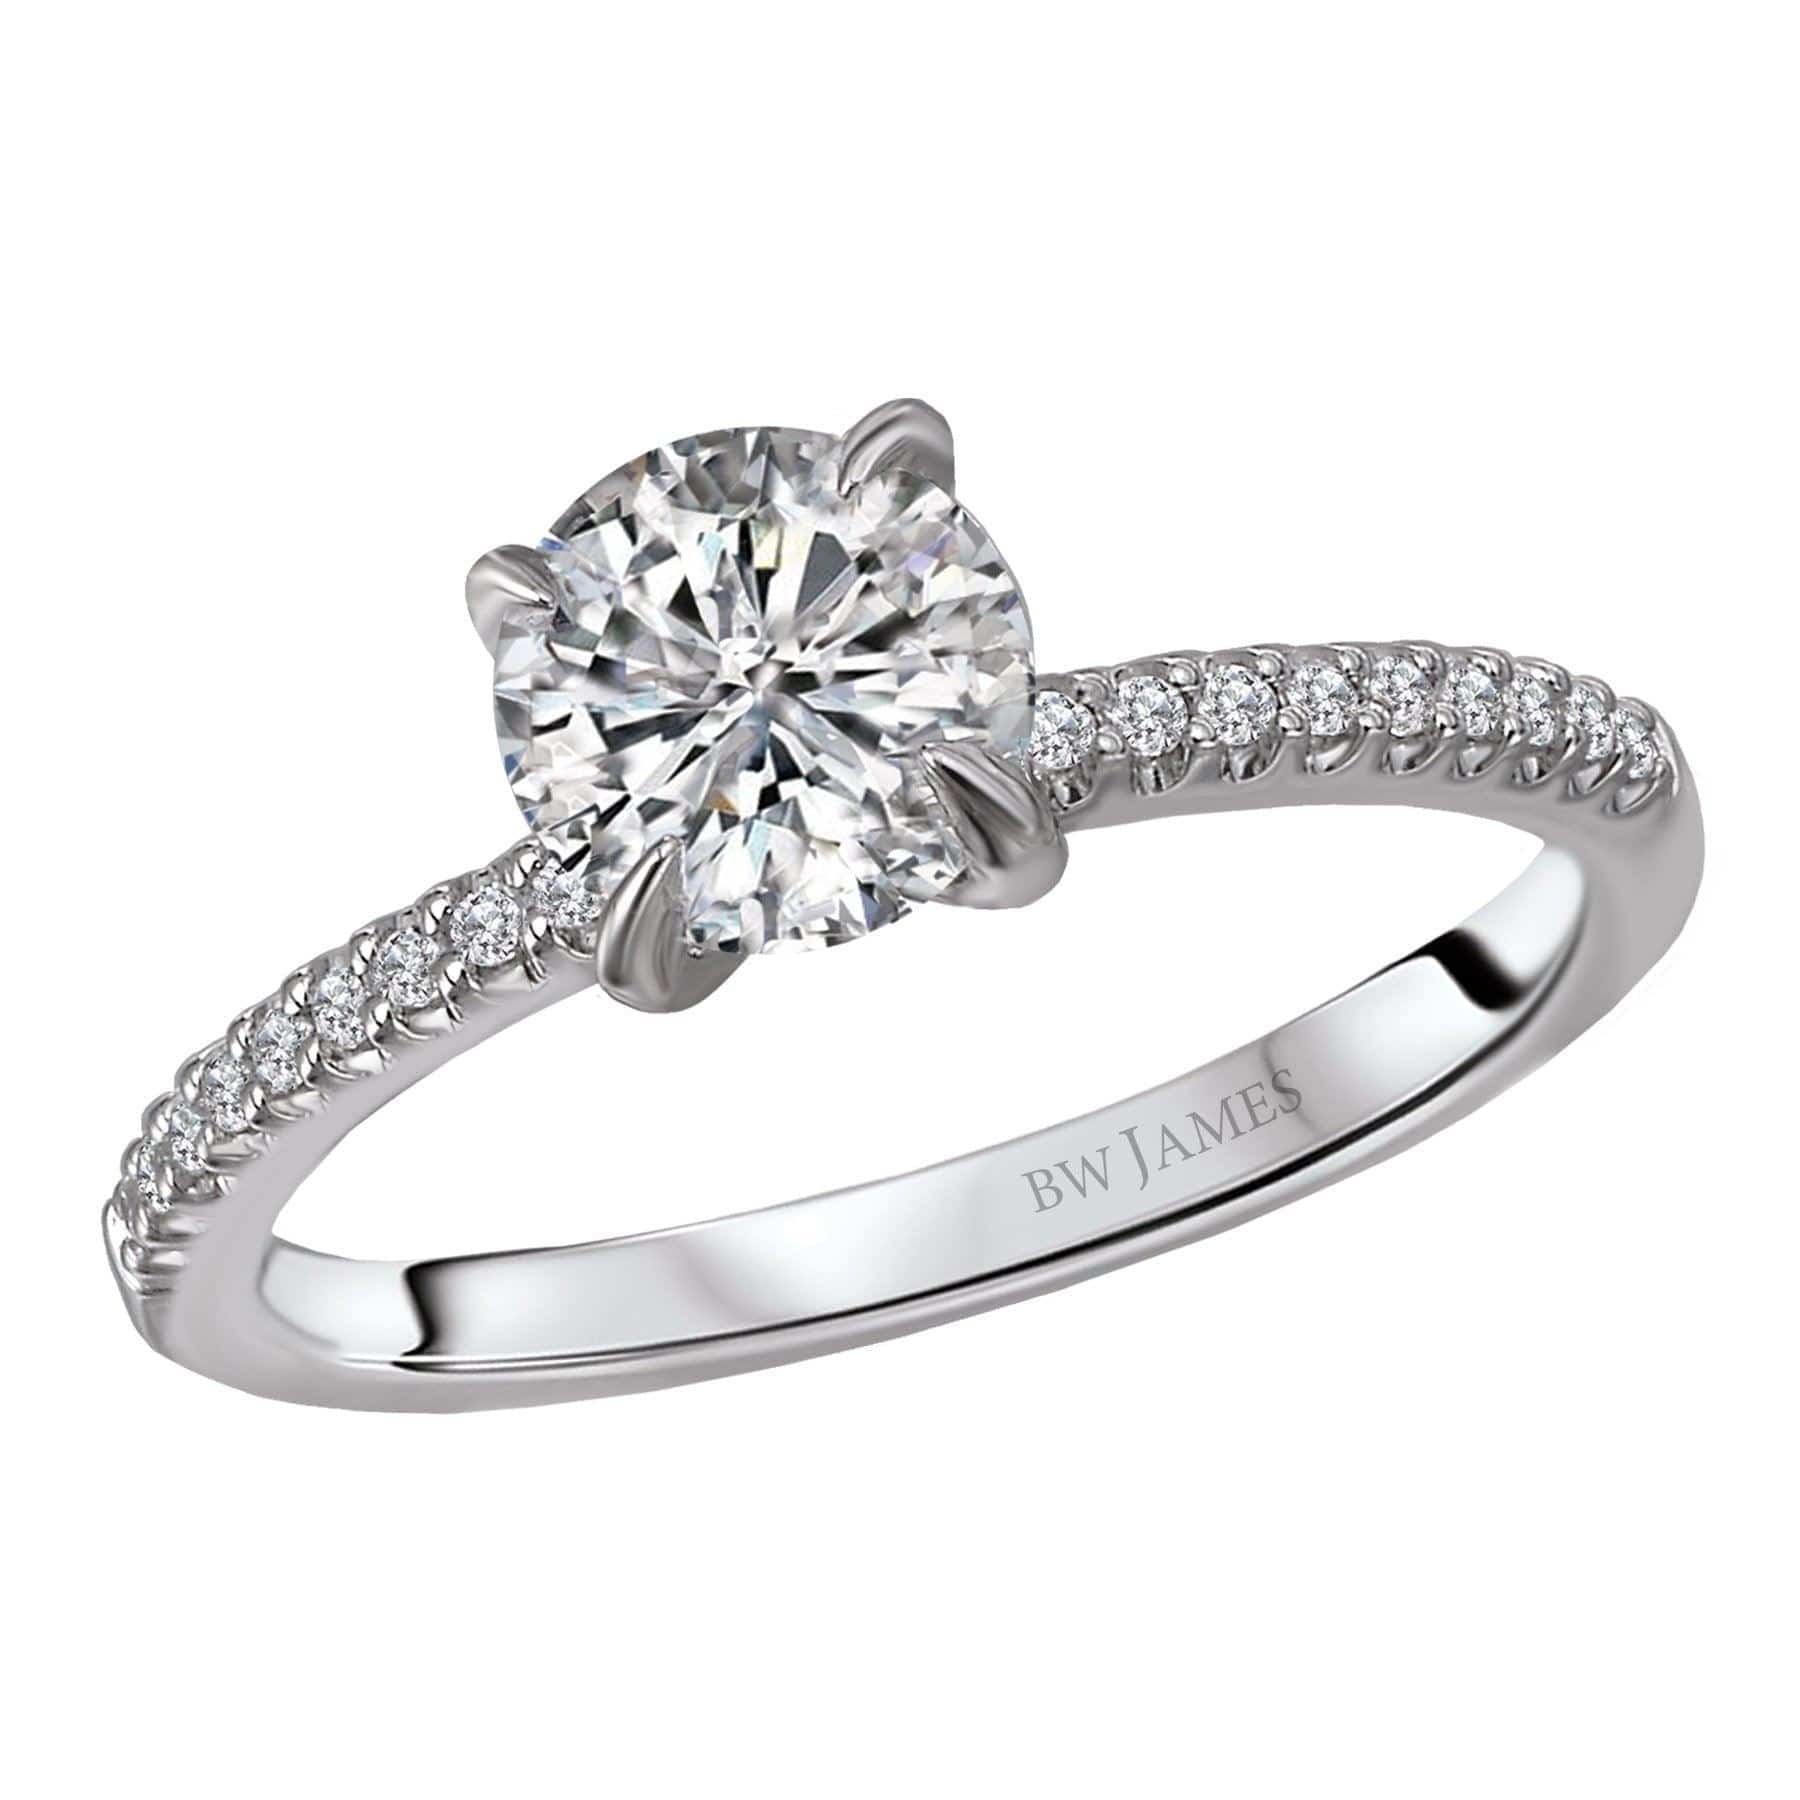 BW JAMES Engagement Rings "The Nashville" Classic Semi-Mount Diamond Ring